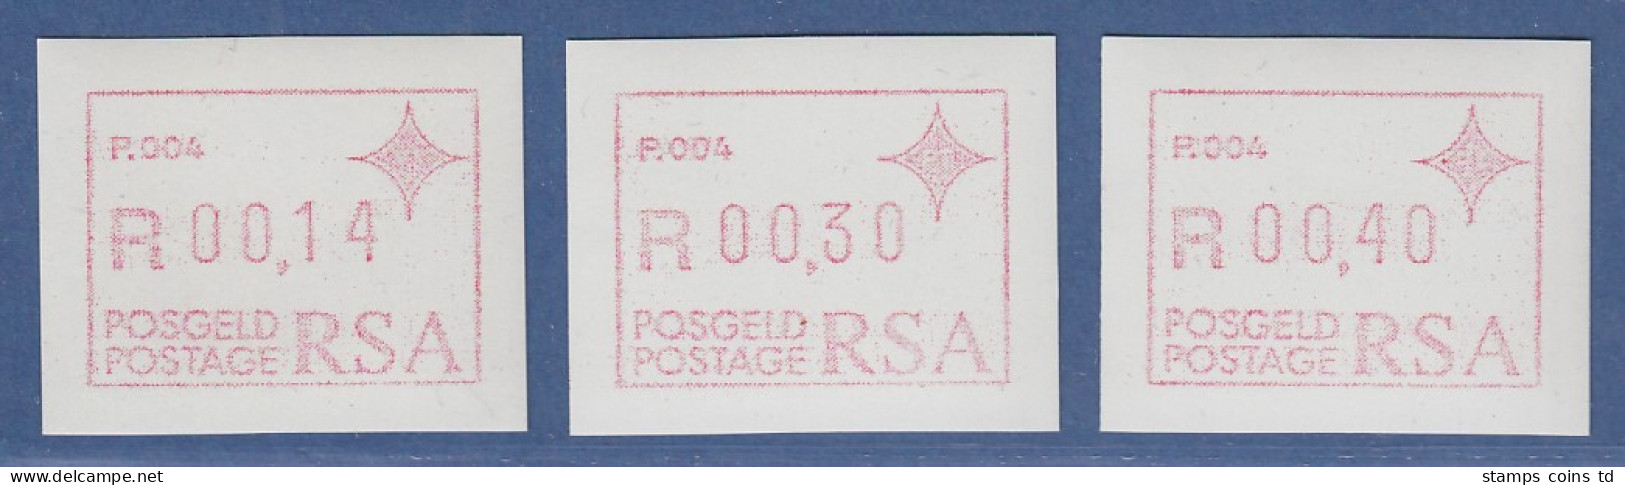 RSA Südafrika FRAMA-ATM  Aut.-Nr. P.004 Satz 14-30-40 ** (VS) - Frama Labels